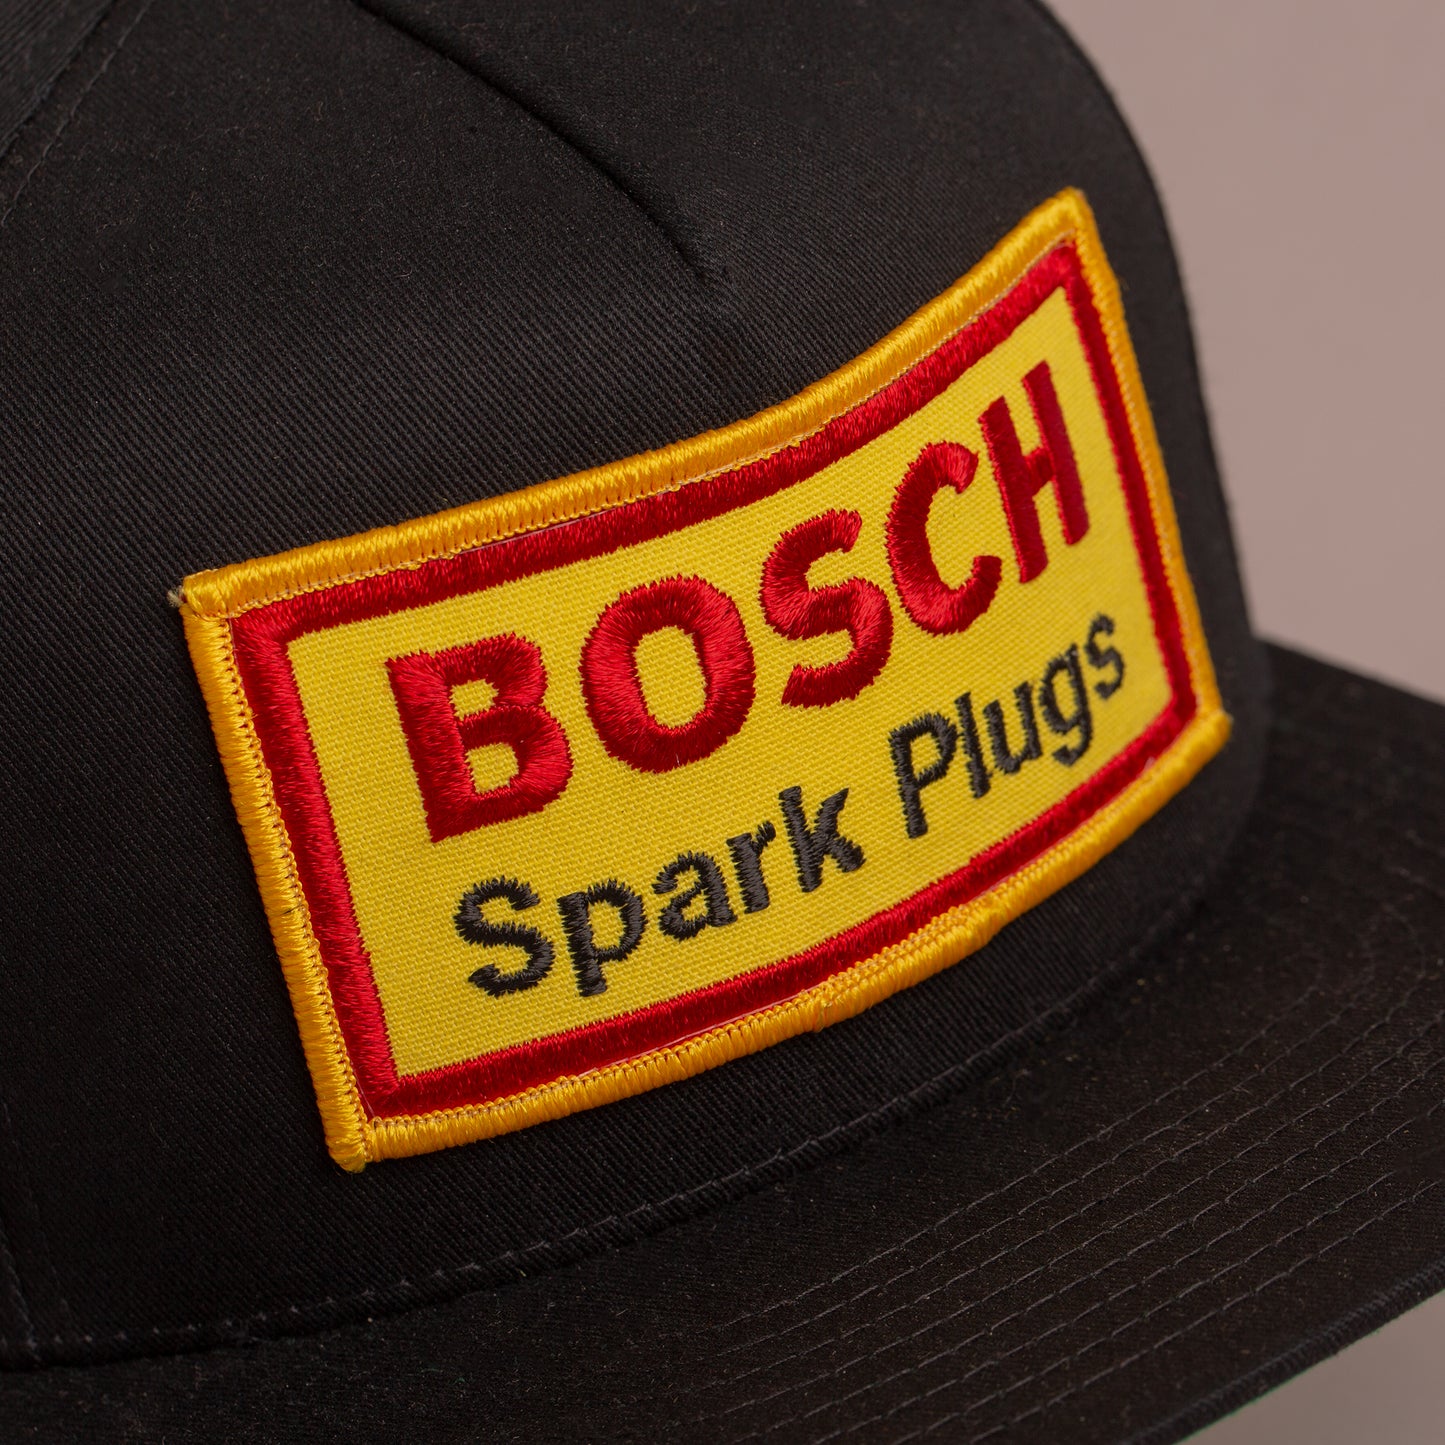 Bosch Spark Plugs